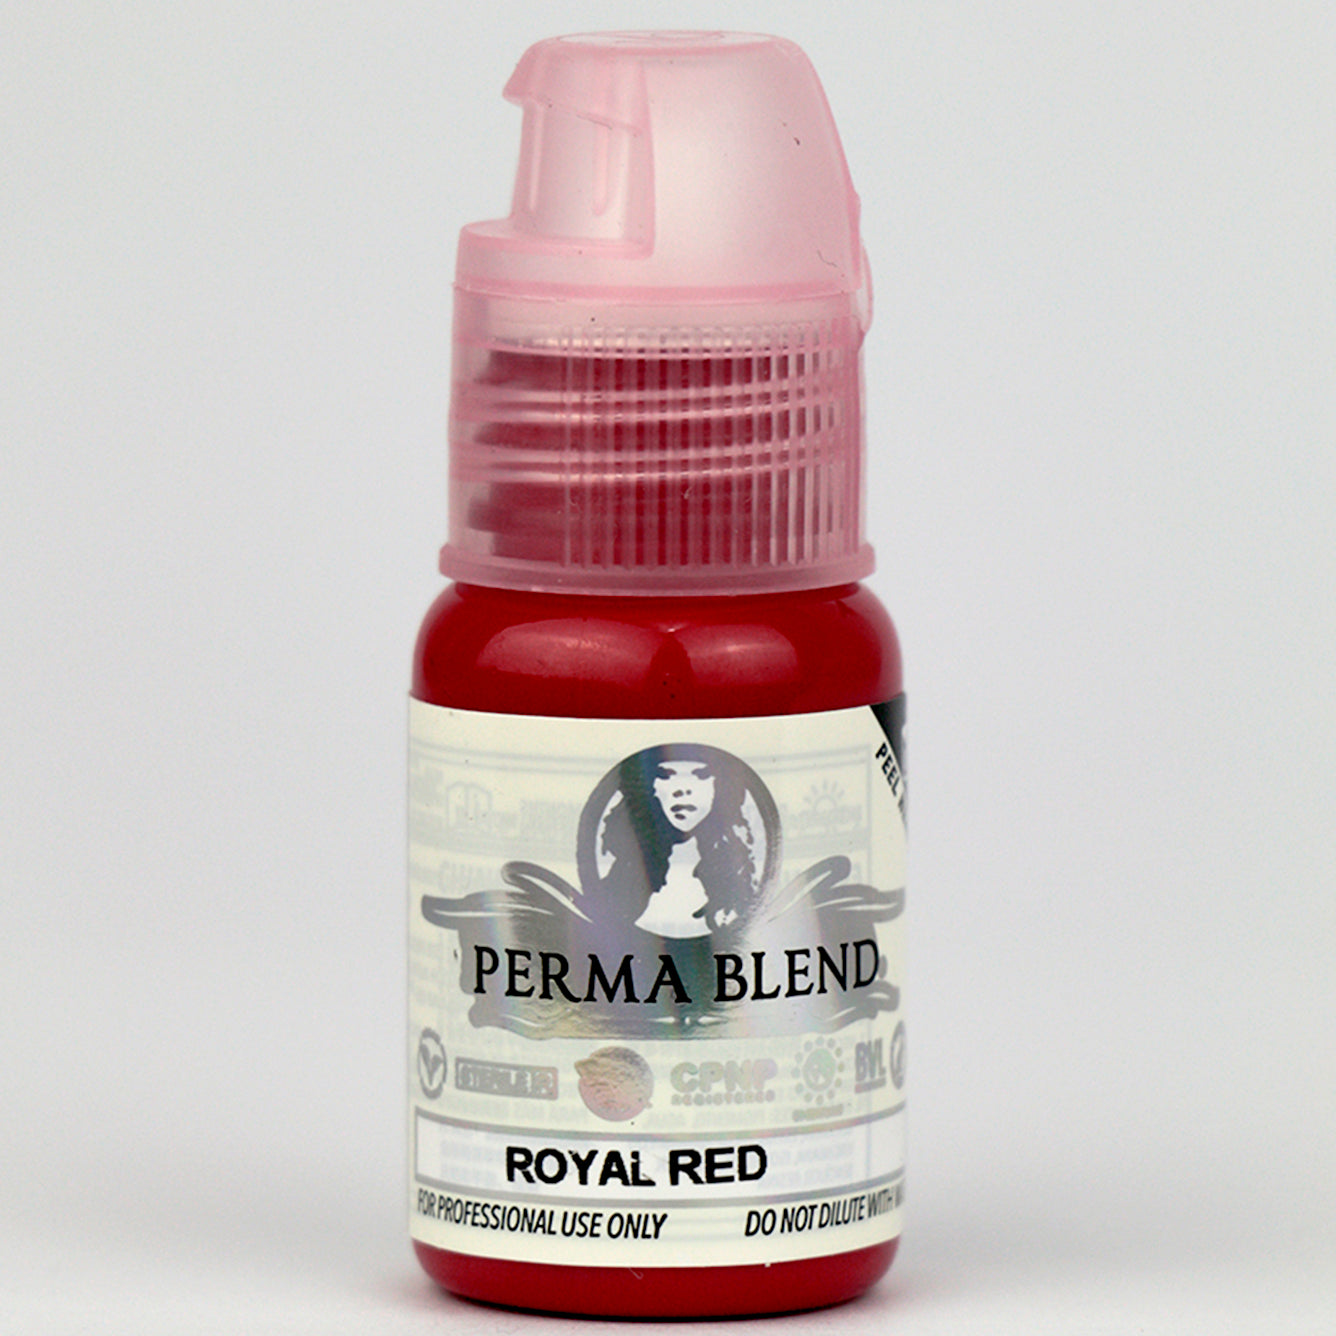 Perma Blend Royal red